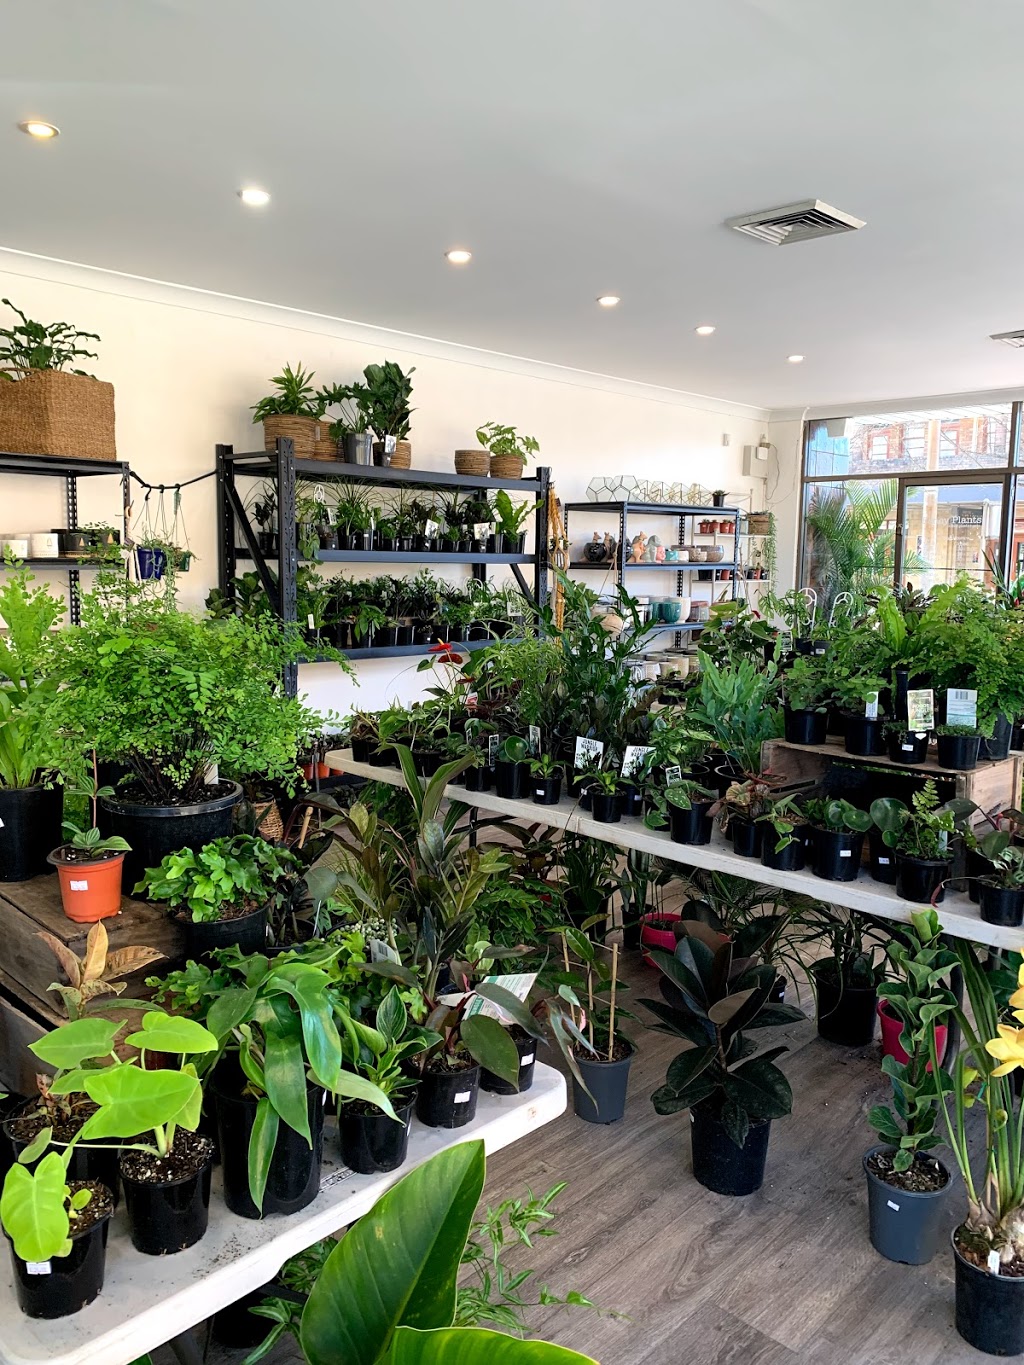 Fancy Plants |  | 491 High St, Maitland NSW 2320, Australia | 0412945438 OR +61 412 945 438